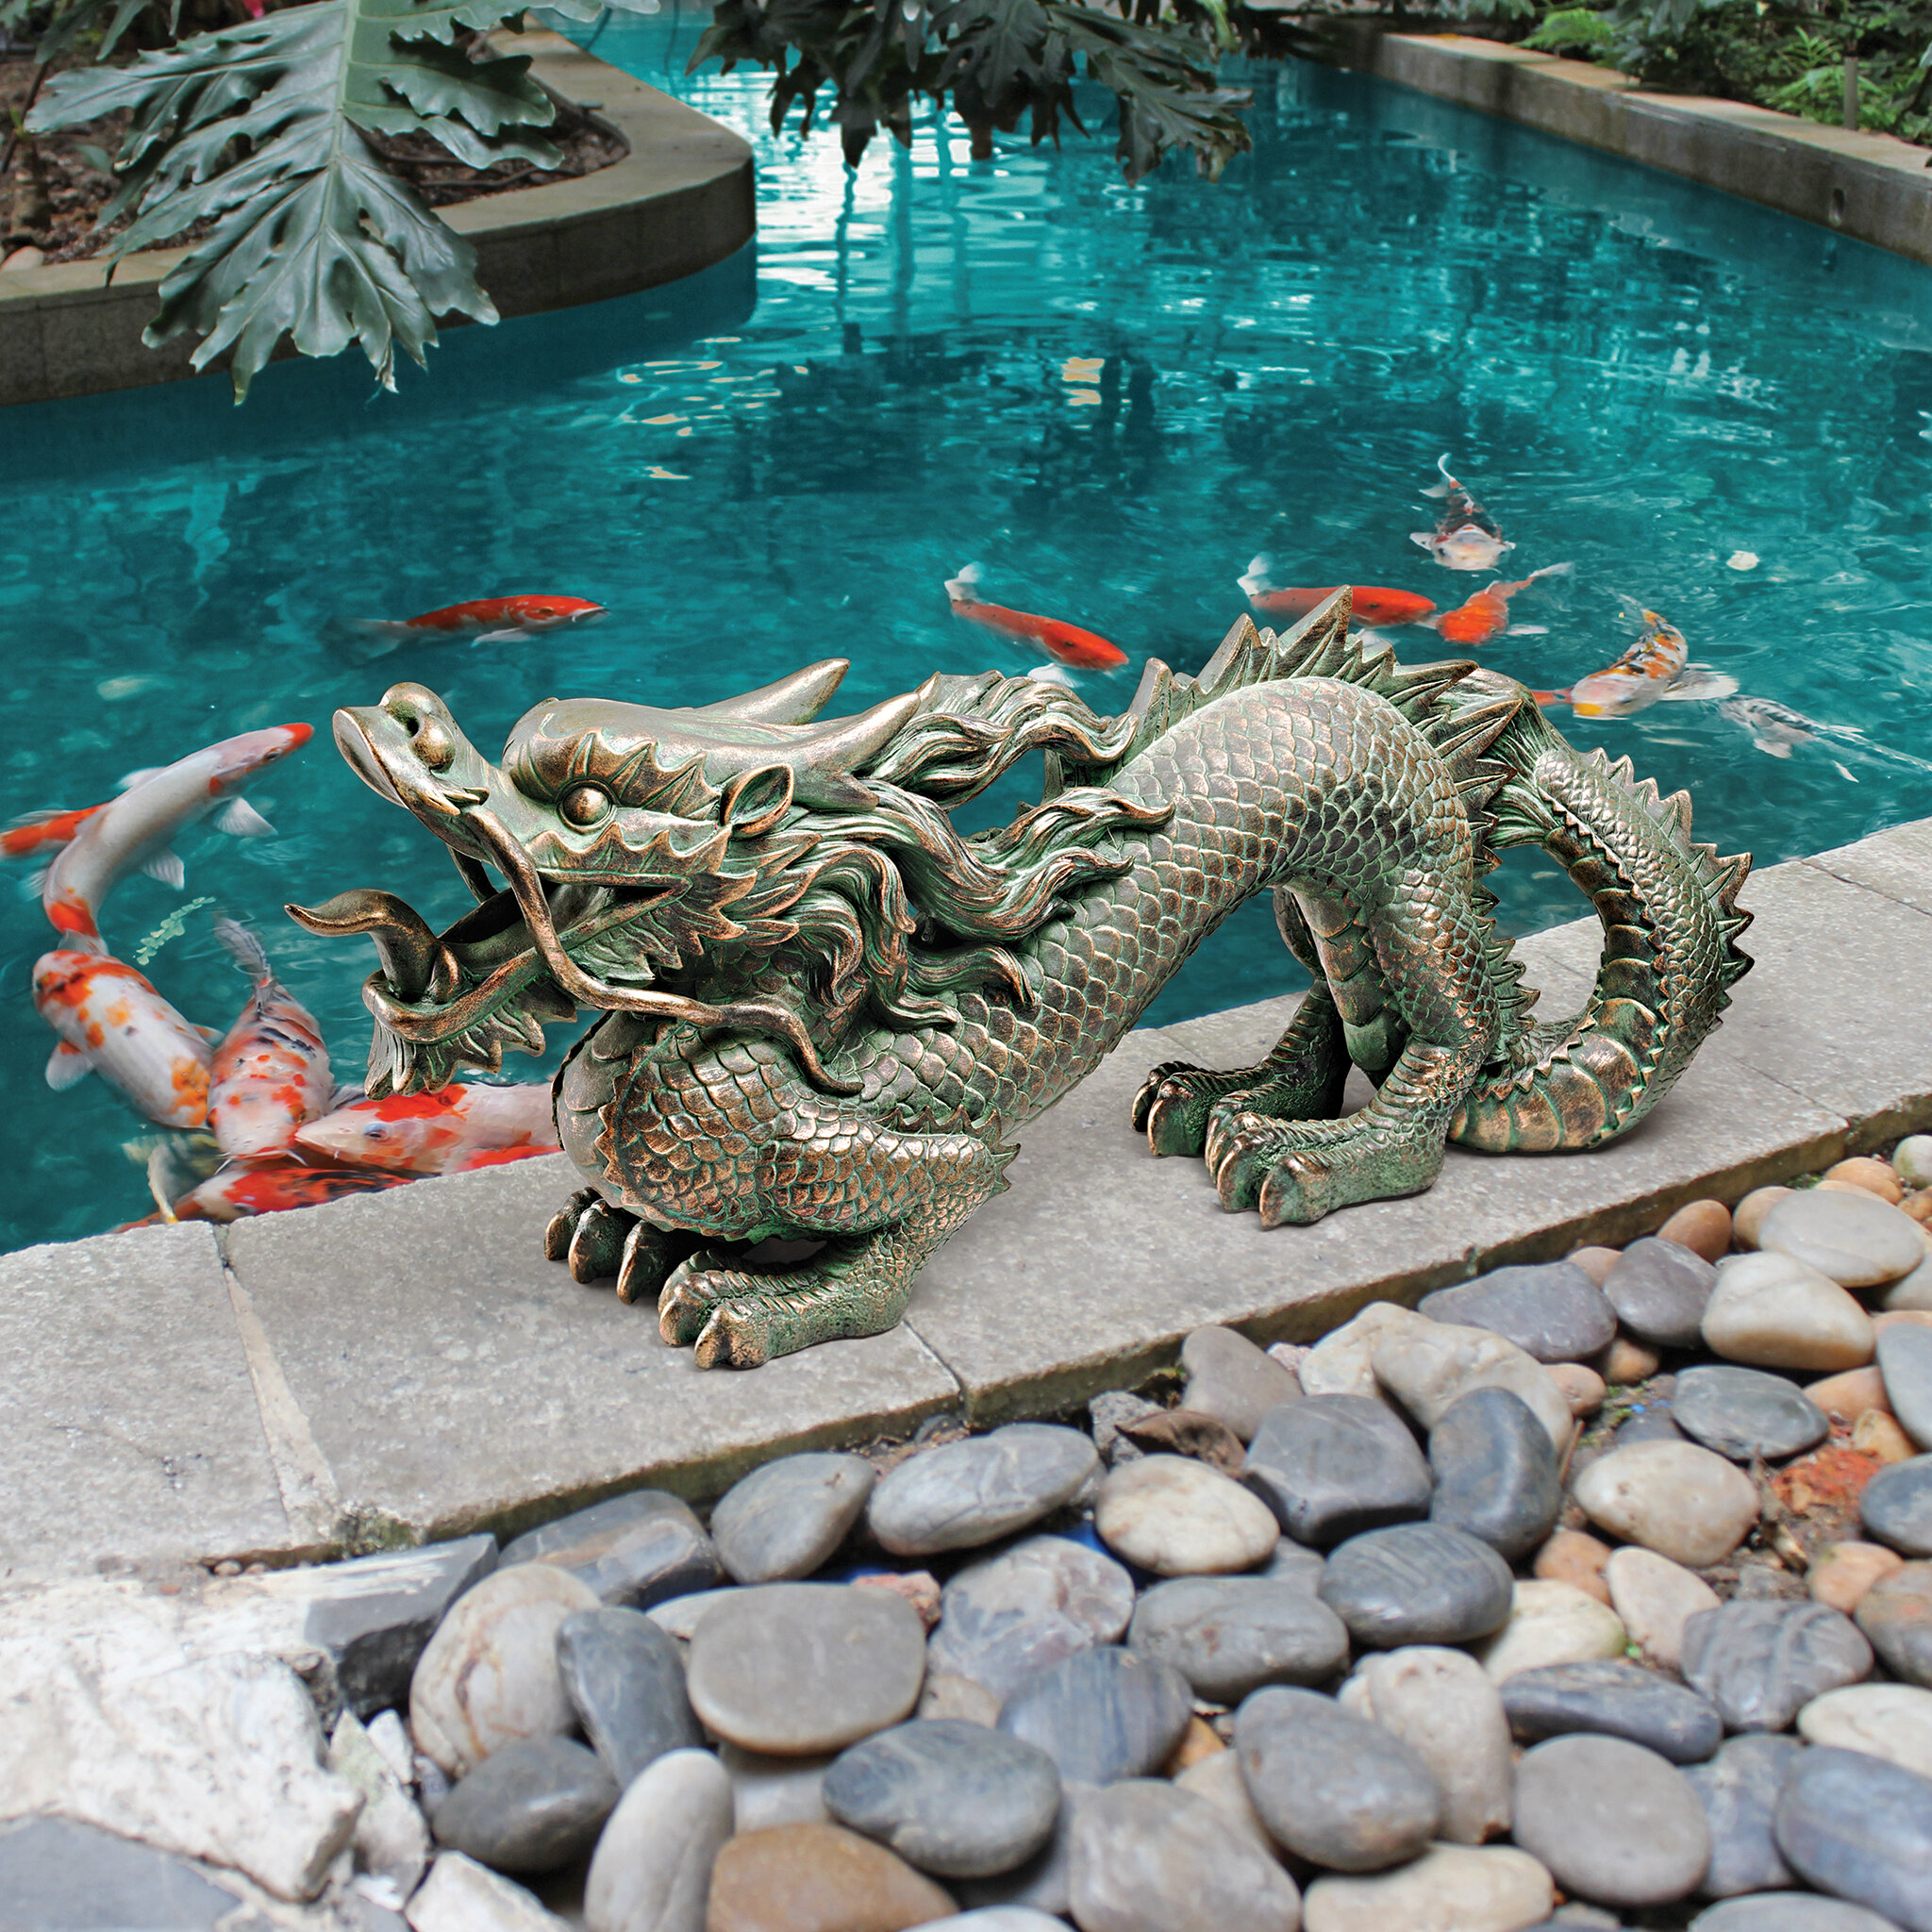 chinese water dragon swimming in pool